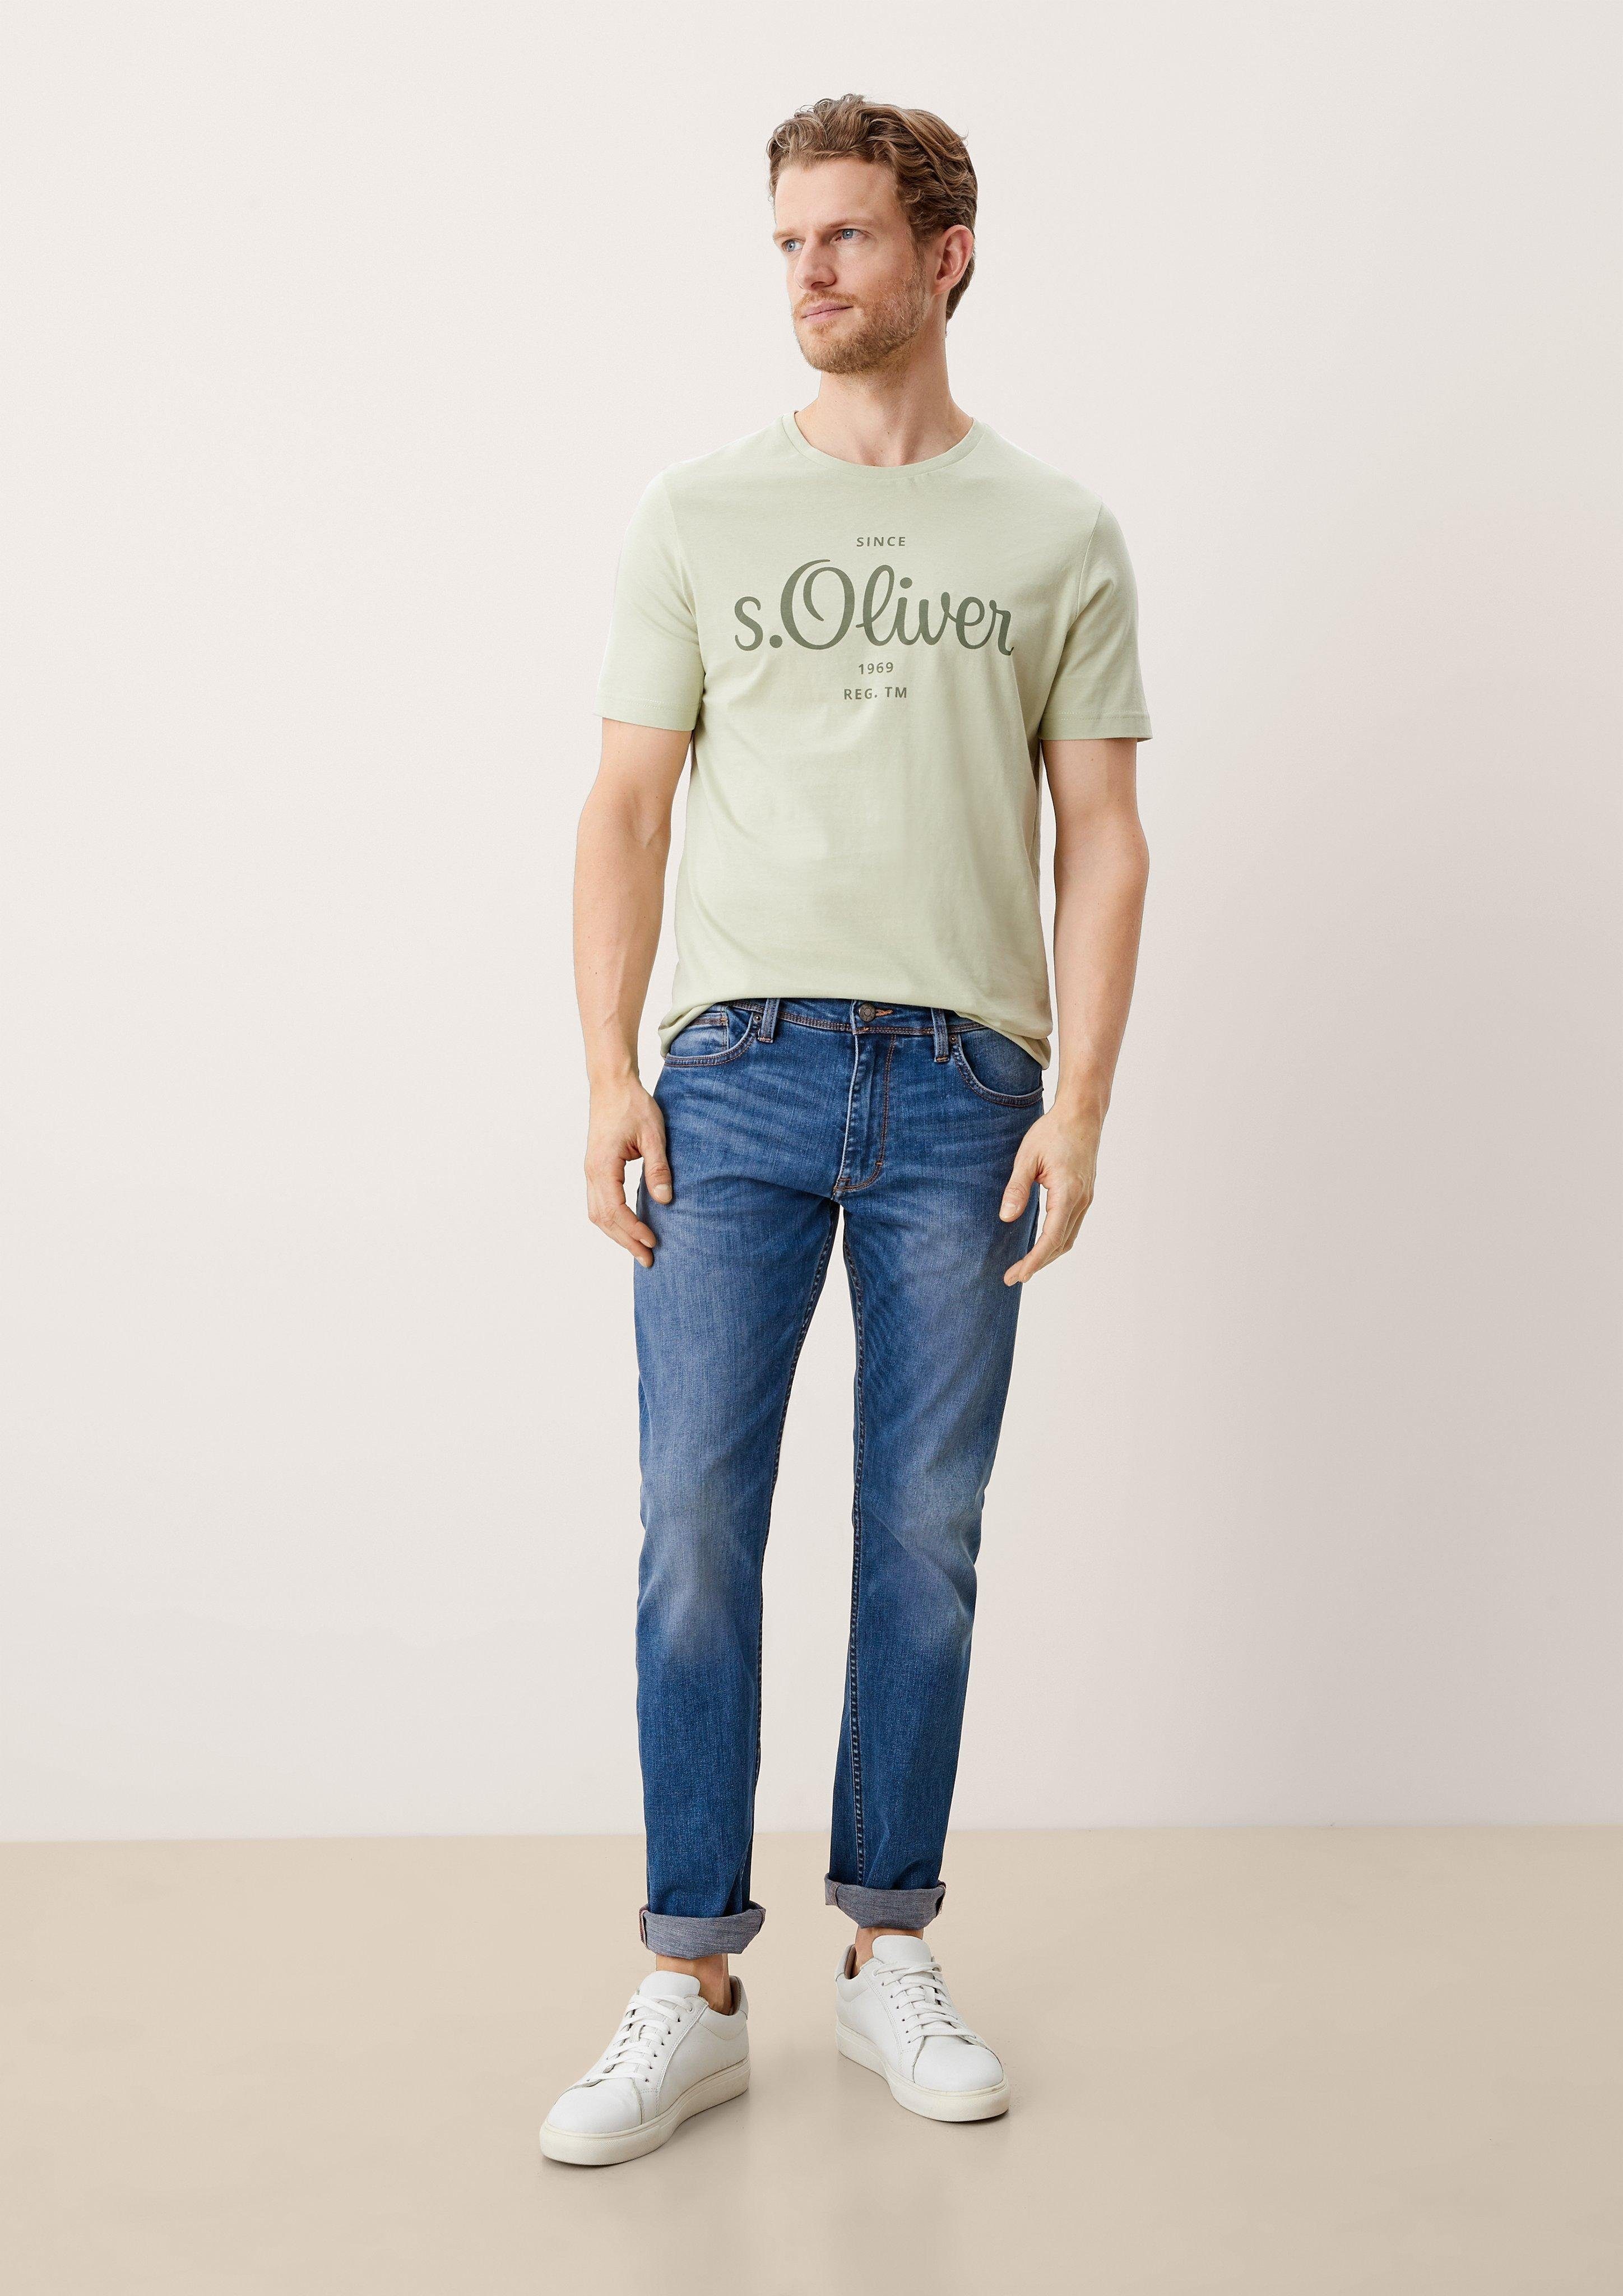 Keith Rise Jeans Mid / Slim / Leg s.Oliver blue Fit Slim Waschung / 5-Pocket-Jeans Leder-Patch,